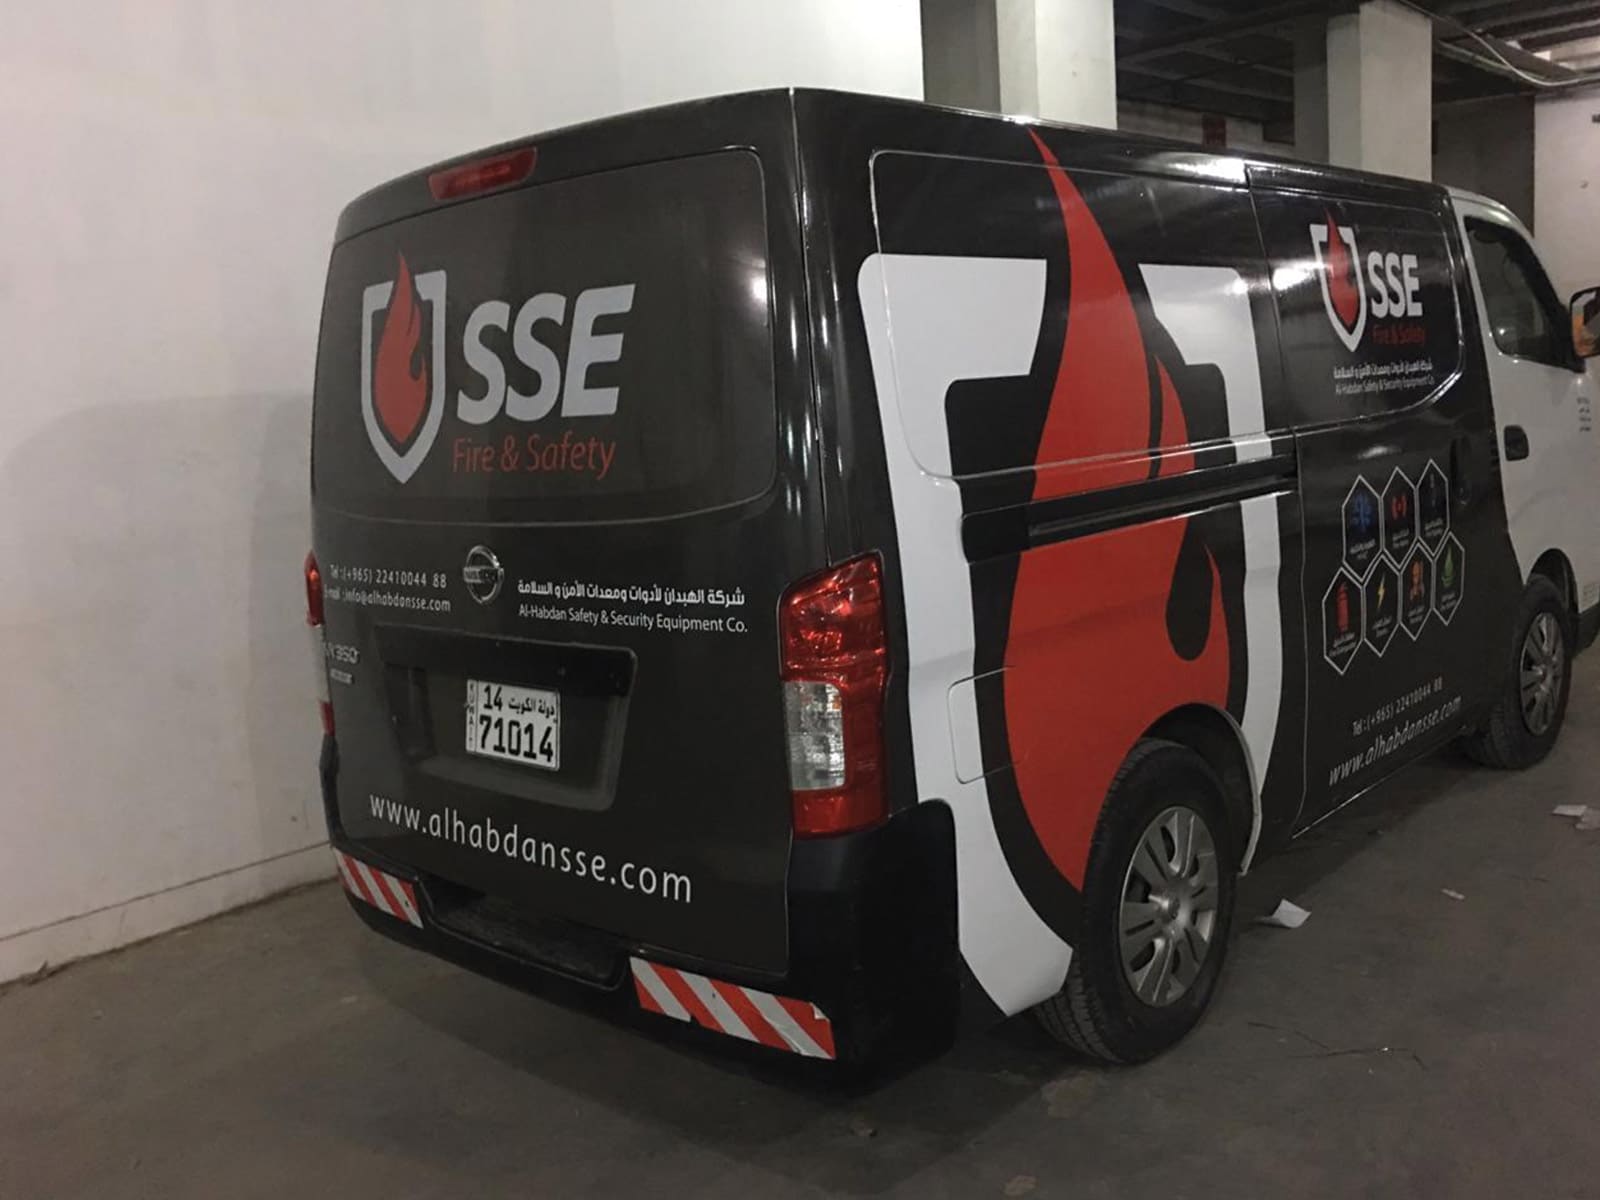 SSE Al Habdaan car work done by inkservice Kuwait using print technology